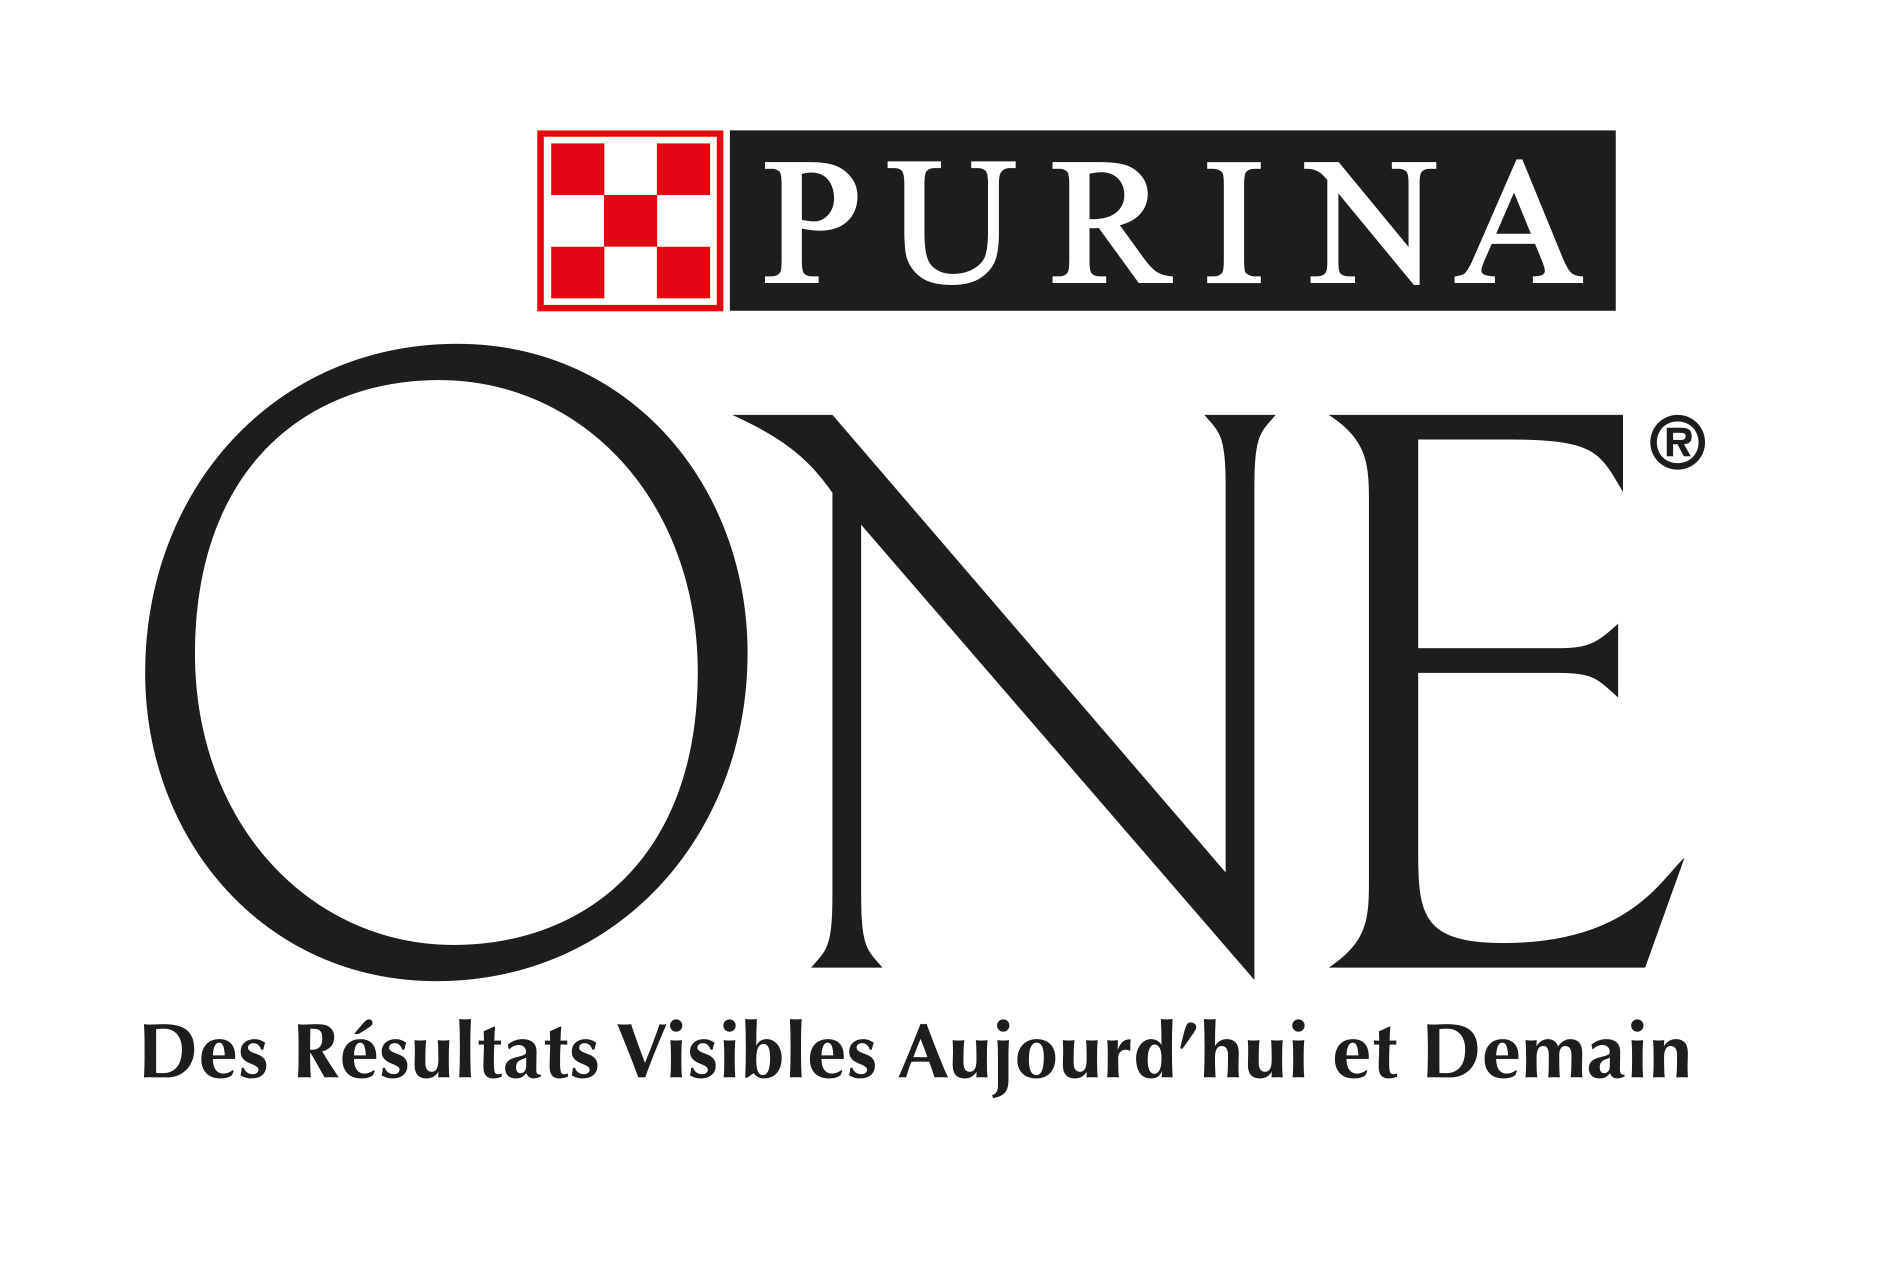 Purina One®